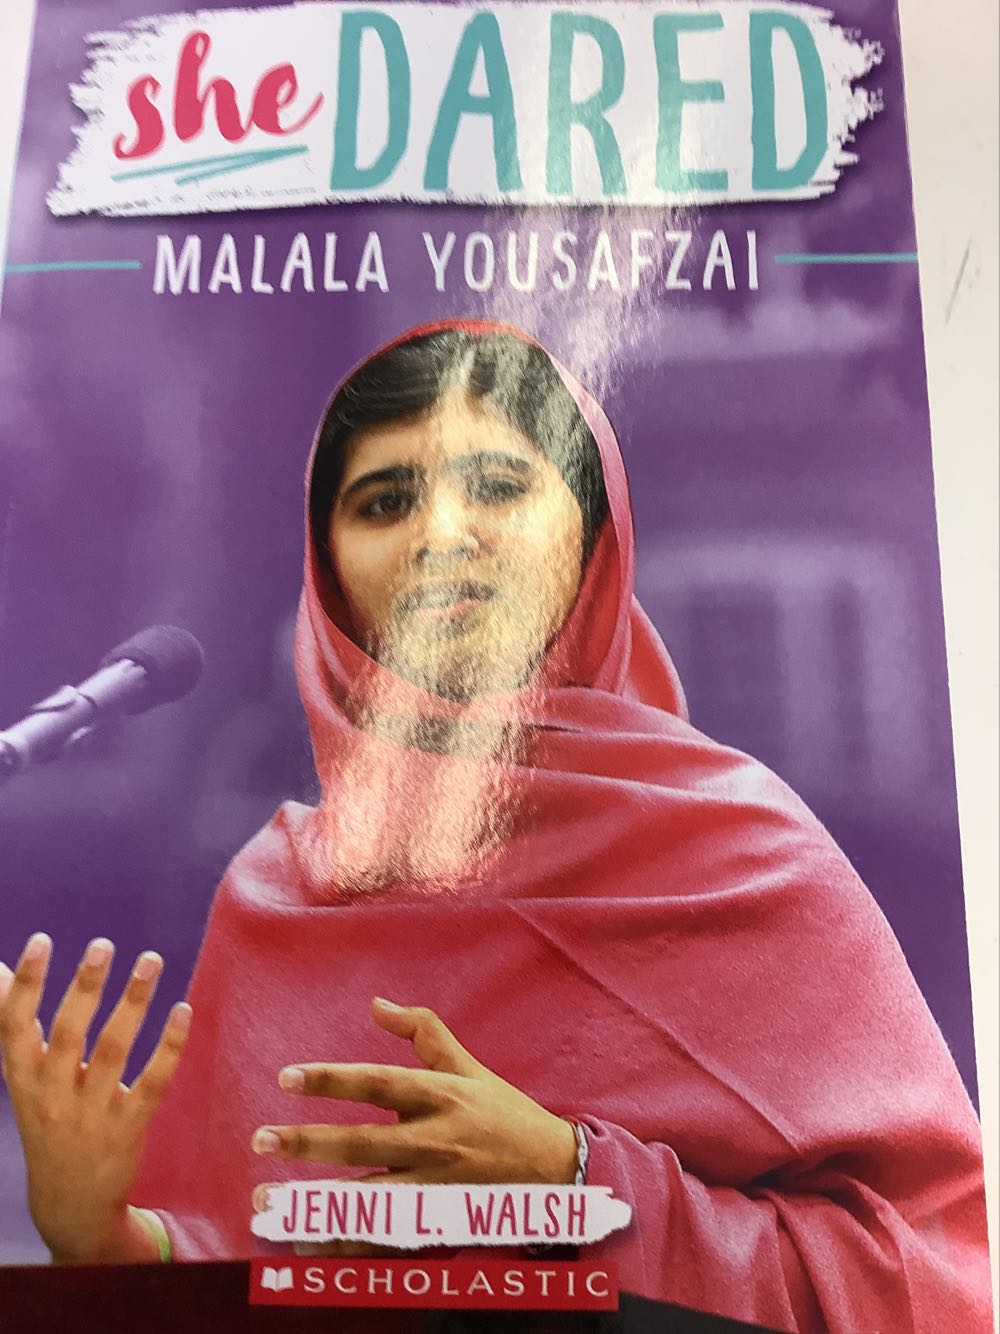 She Dared: Malala Yousafzai - Jenni L. Walsh (Scholastic Inc. - Paperback) book collectible [Barcode 9781338550818] - Main Image 1